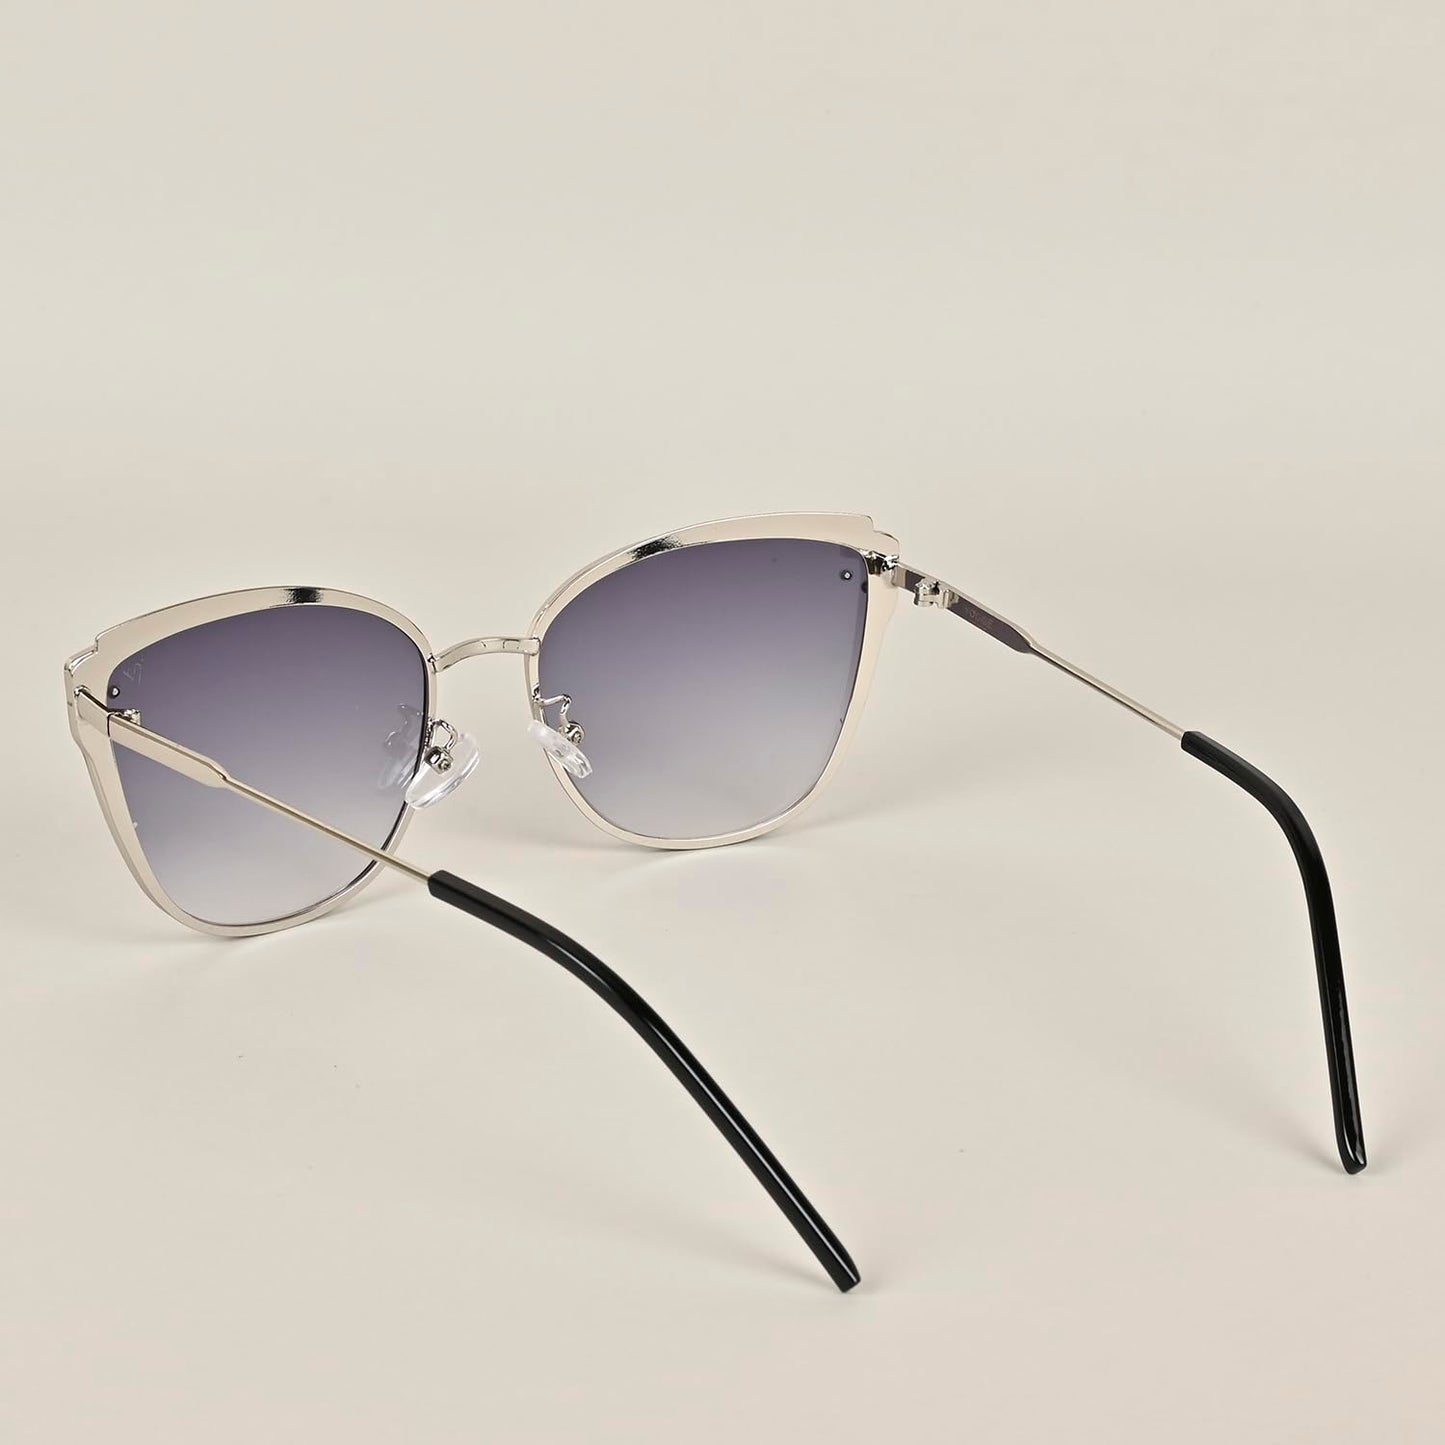 Voyage Stylish Cat-Eye Sunglasses For Women (Grey)